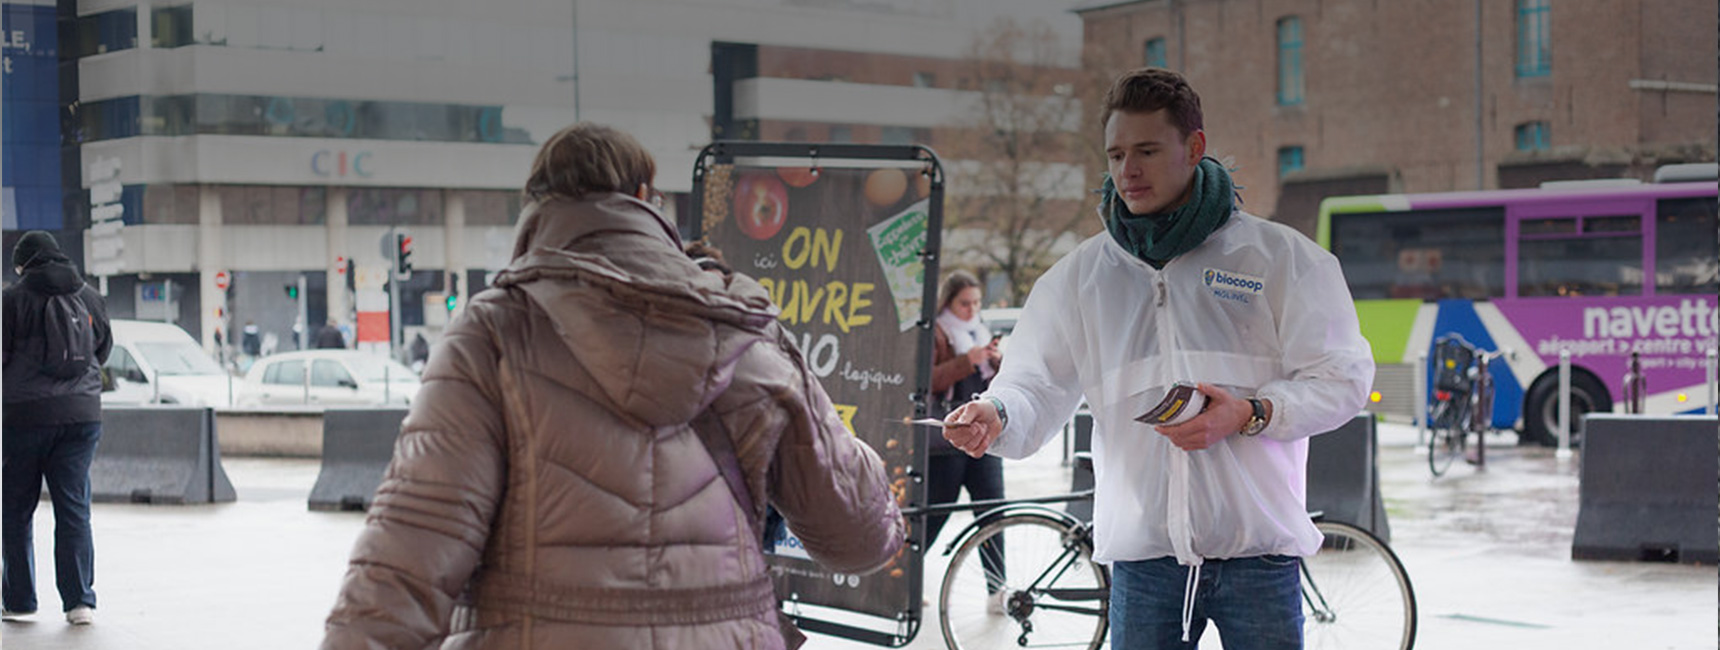 Biocoop en affichage mobile Bike'Com à Lille - Keemia Shopper Marketing - Agence d'activation shopper marketing phygitale